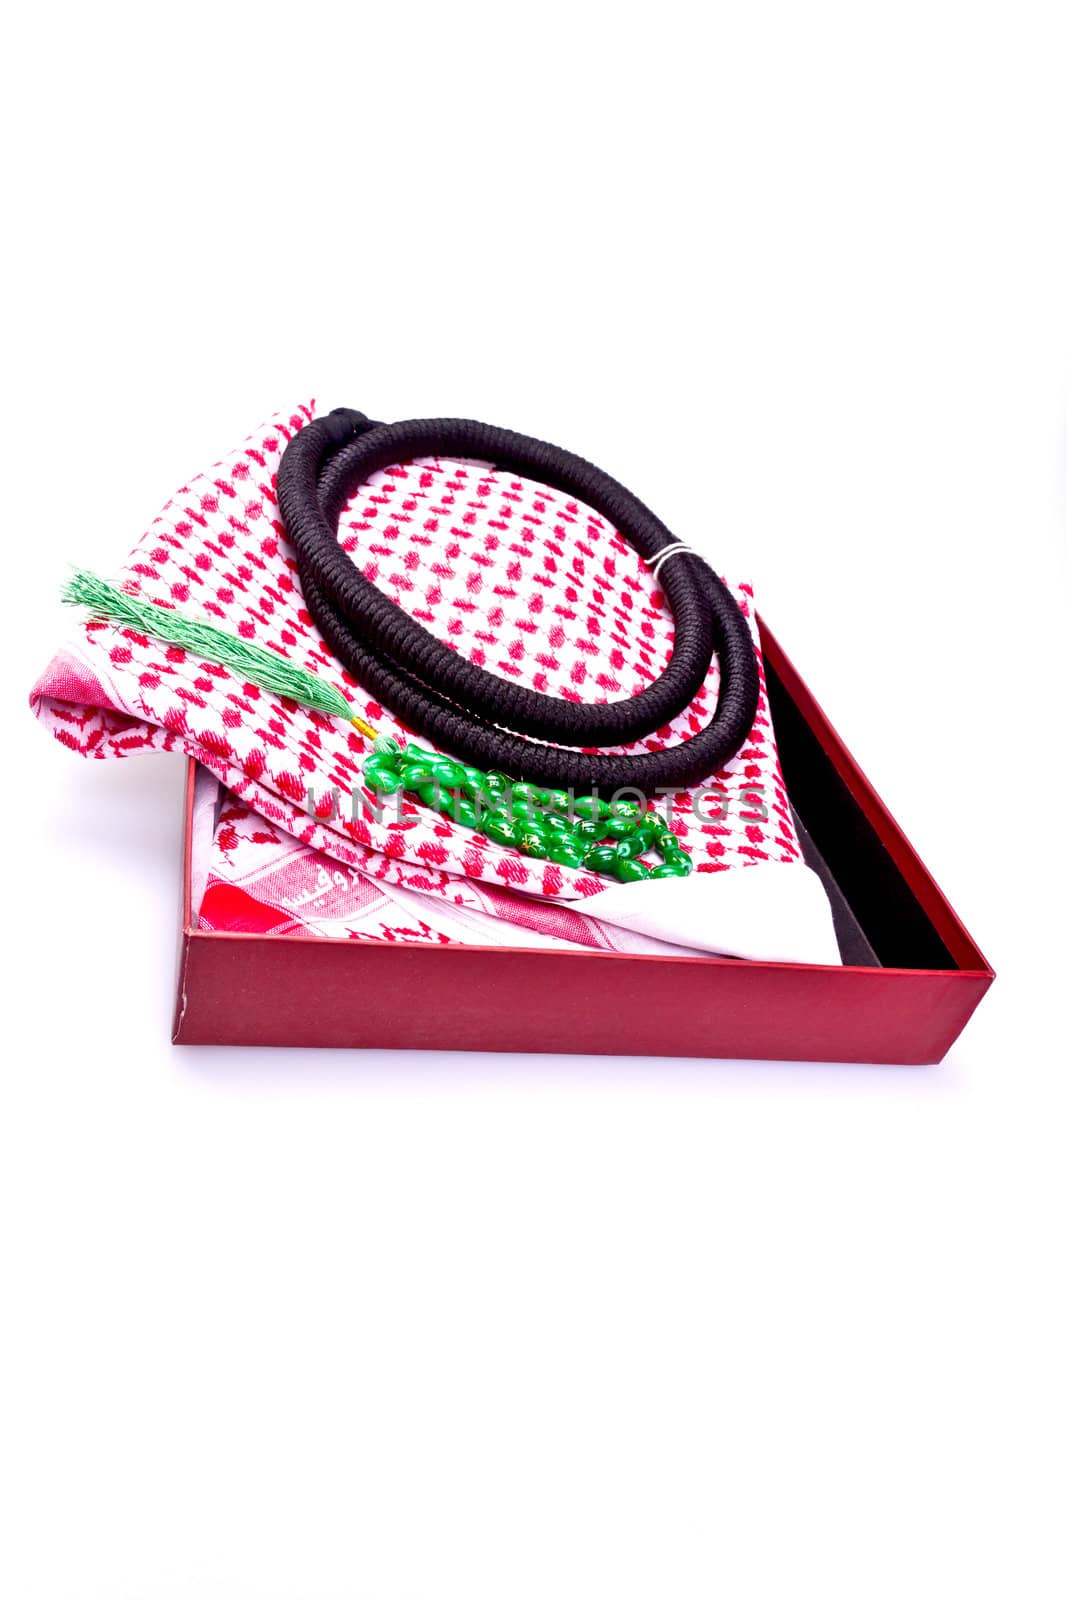 Folded Headscarf Gift by azamshah72